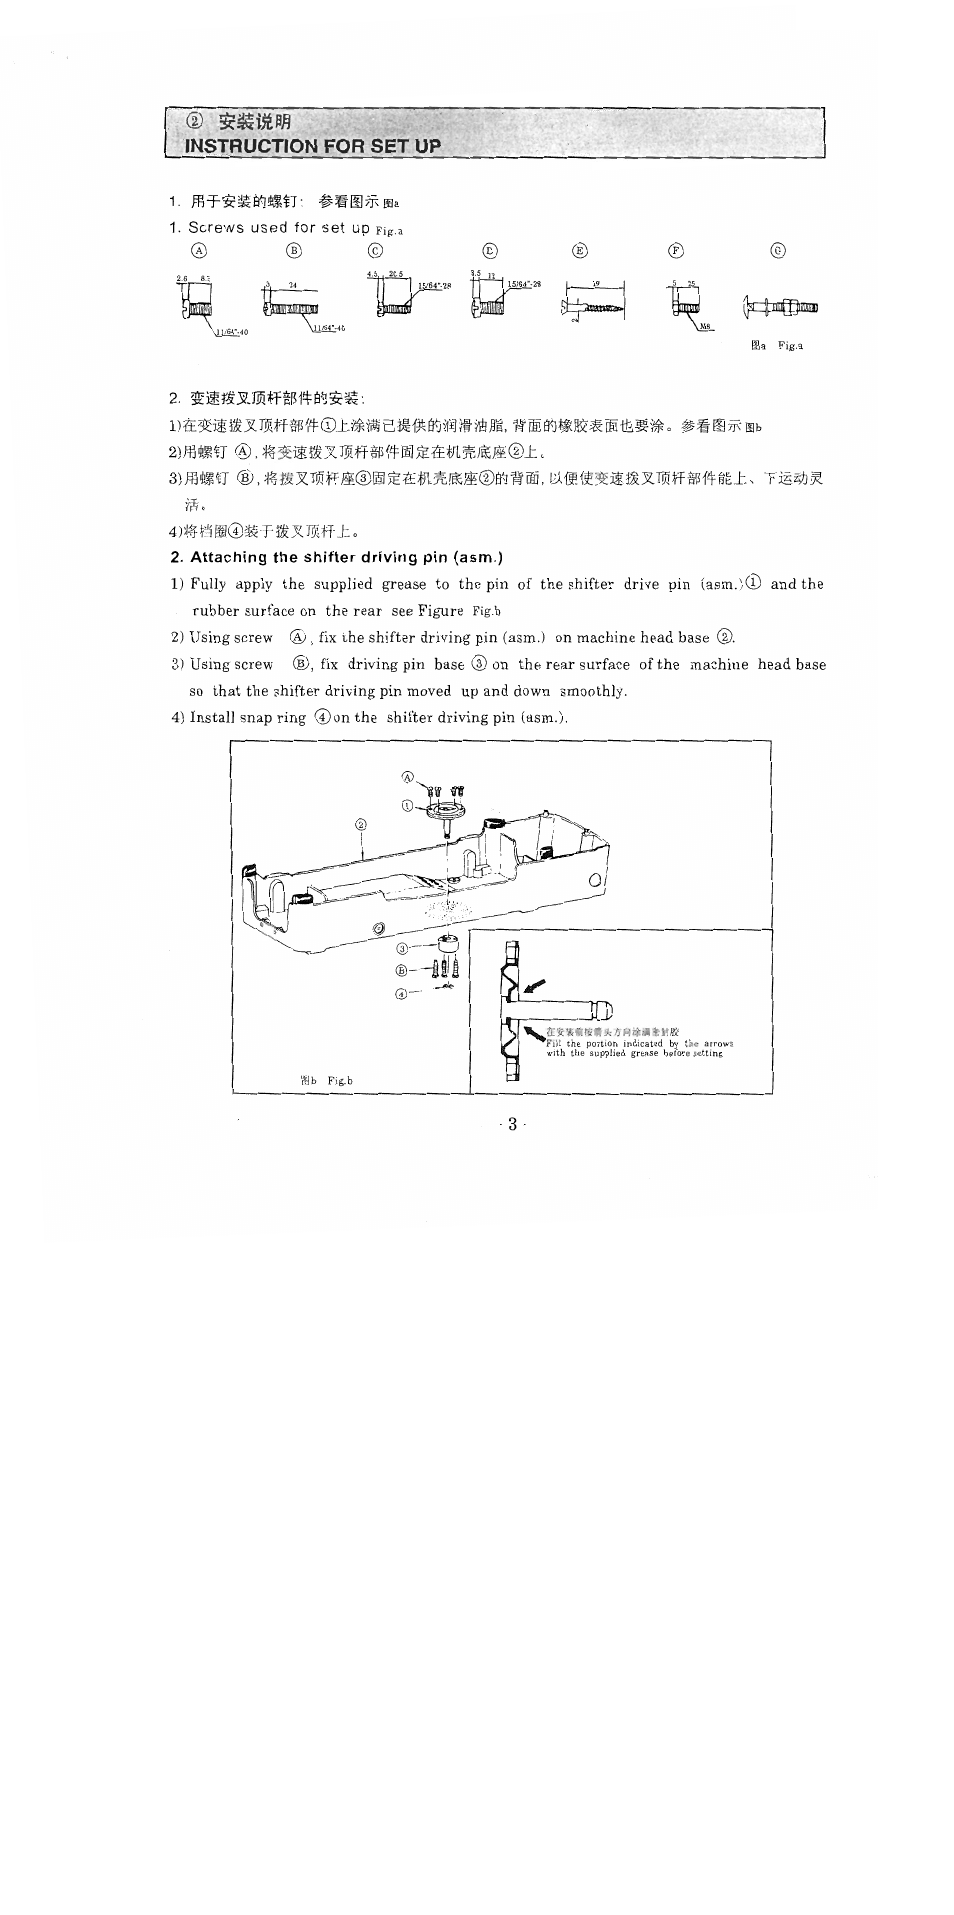 Instruction for set up, ^iiiss]5ffsi5ftklsse | SINGER 1371A2 User Manual | Page 6 / 86